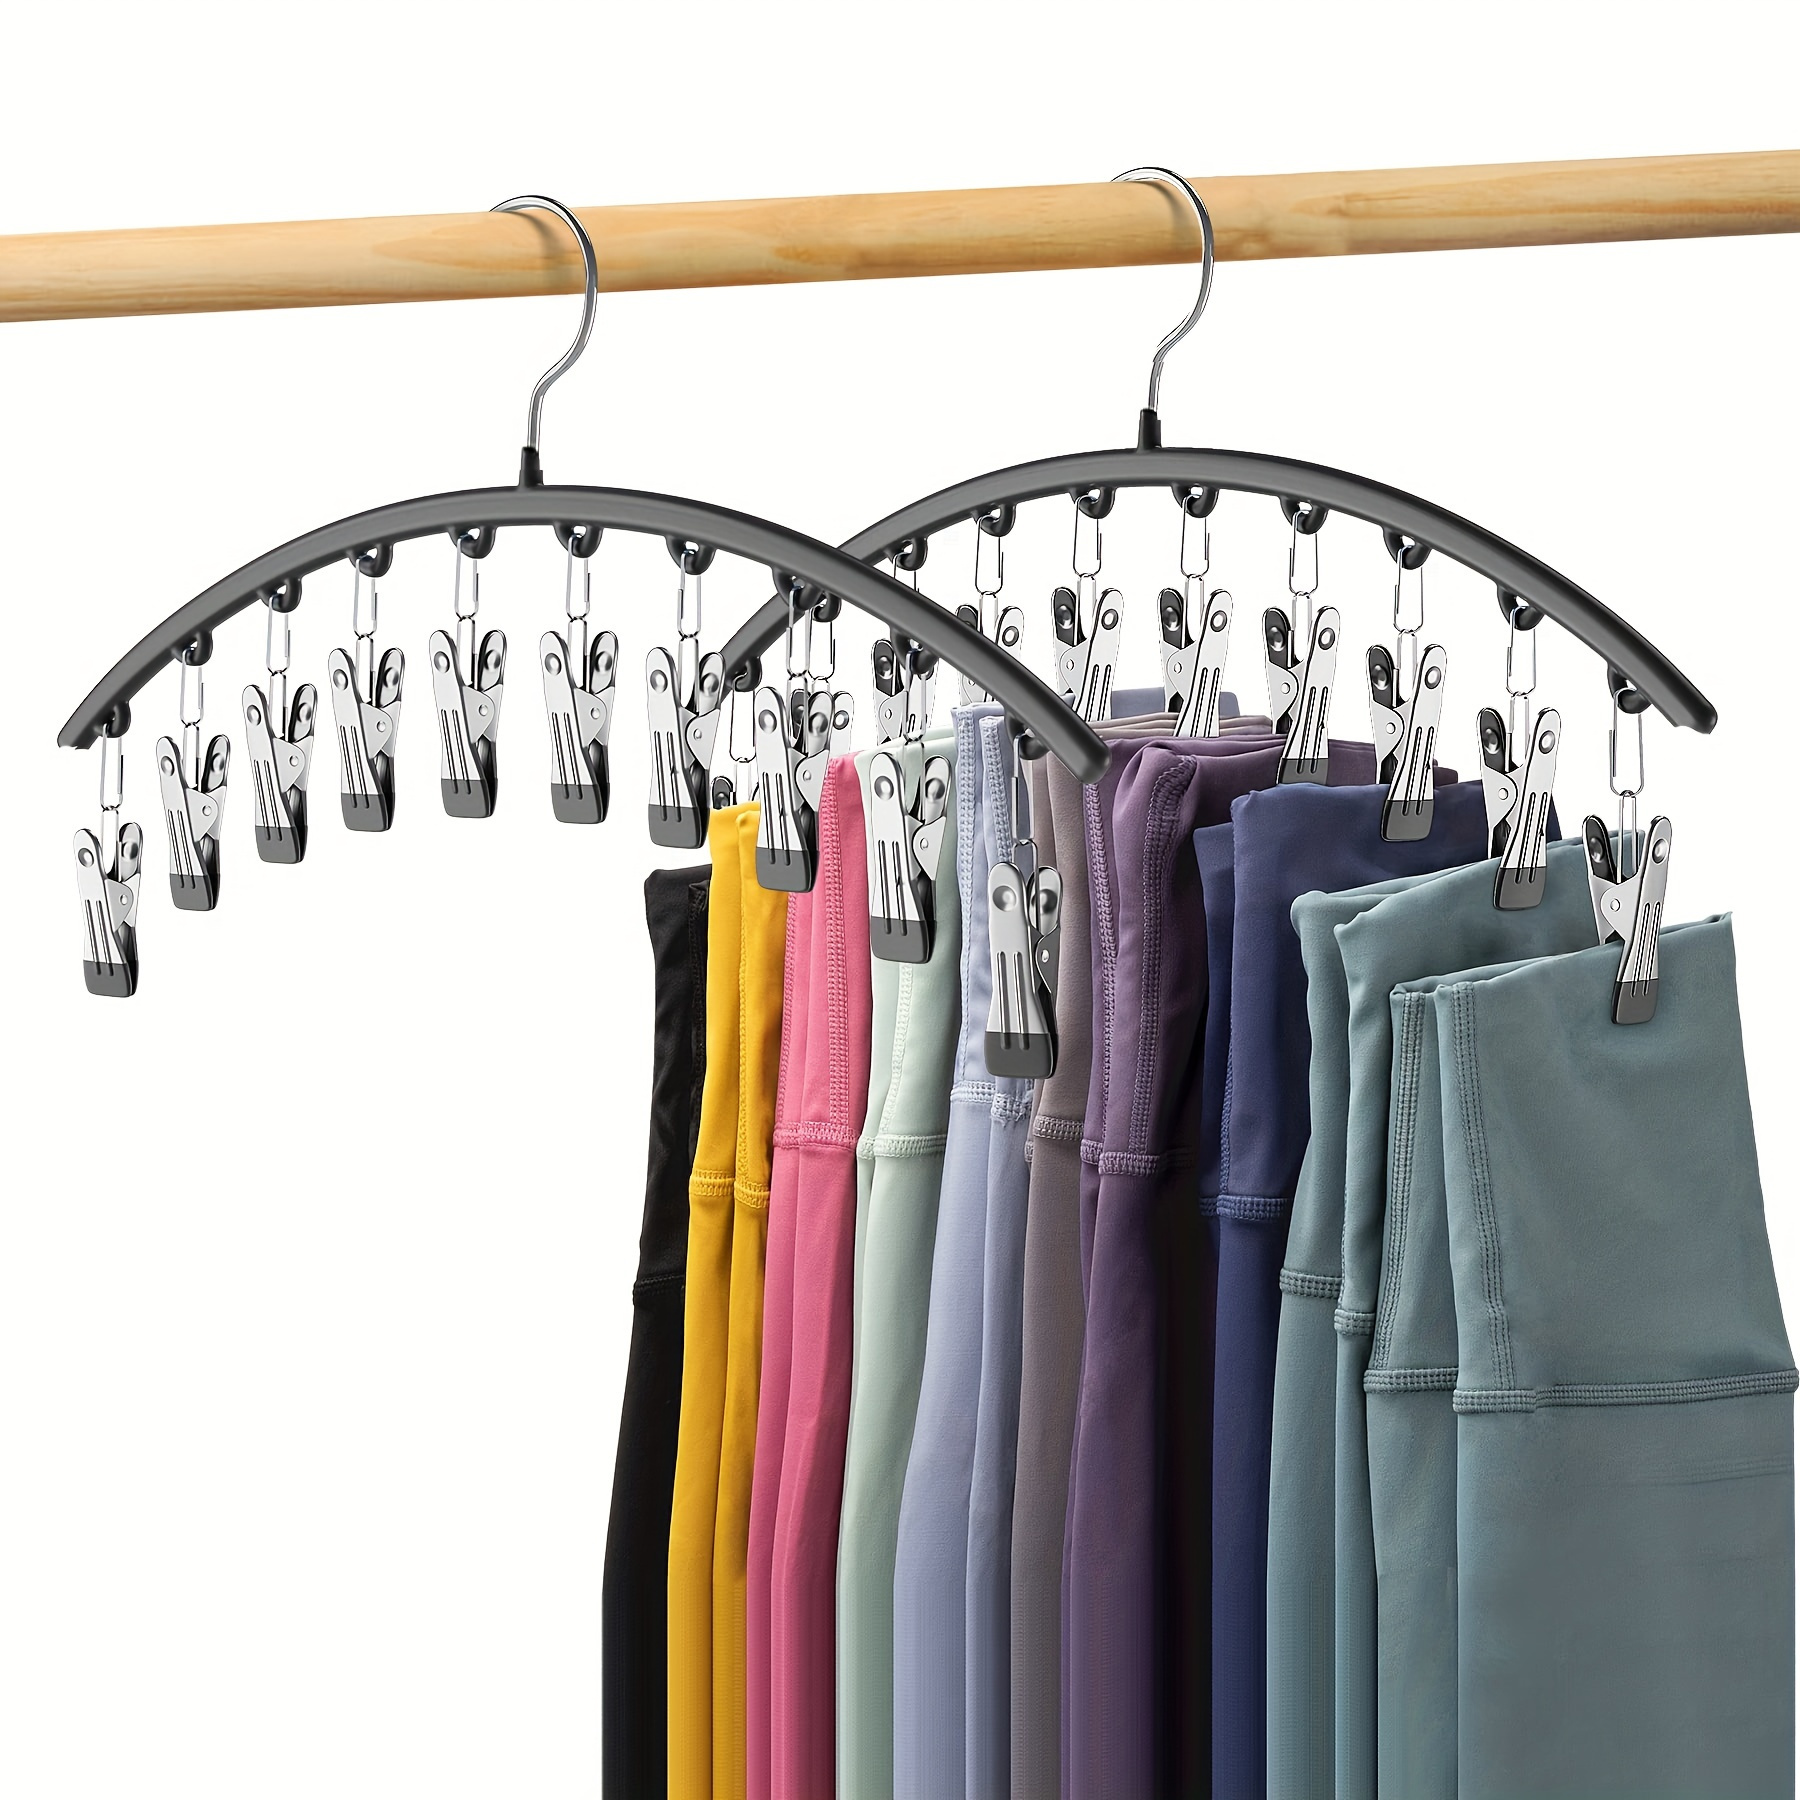 Ganchos perchas para pantalones organizador de ropa colgadores